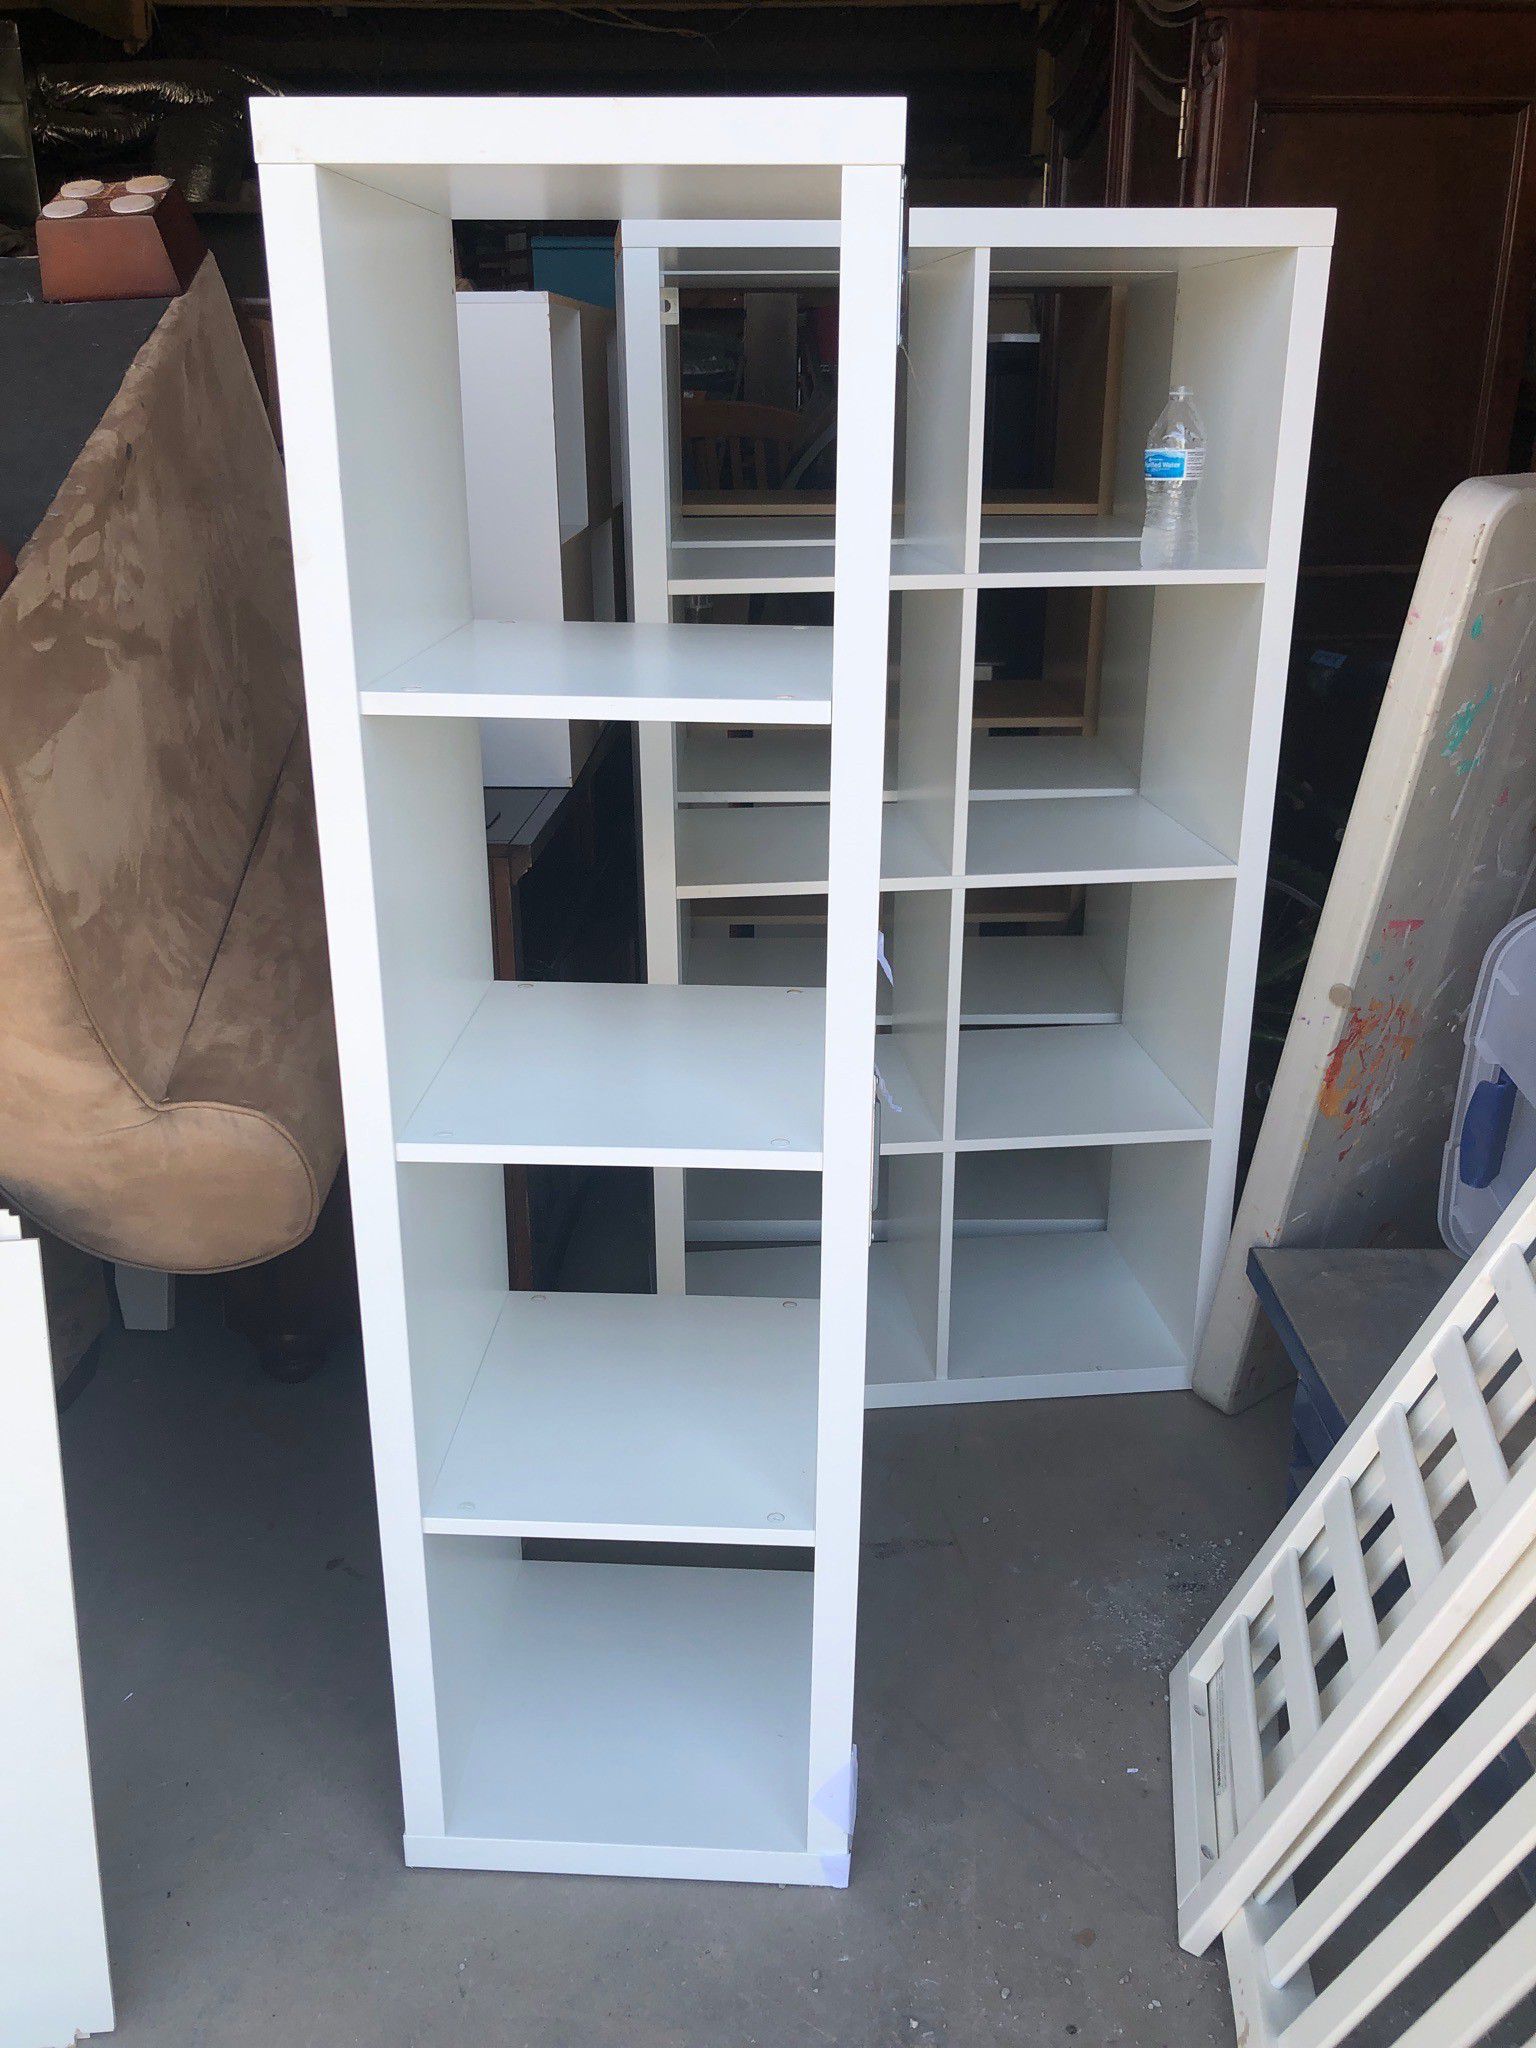 Tall white and tan storage shelves